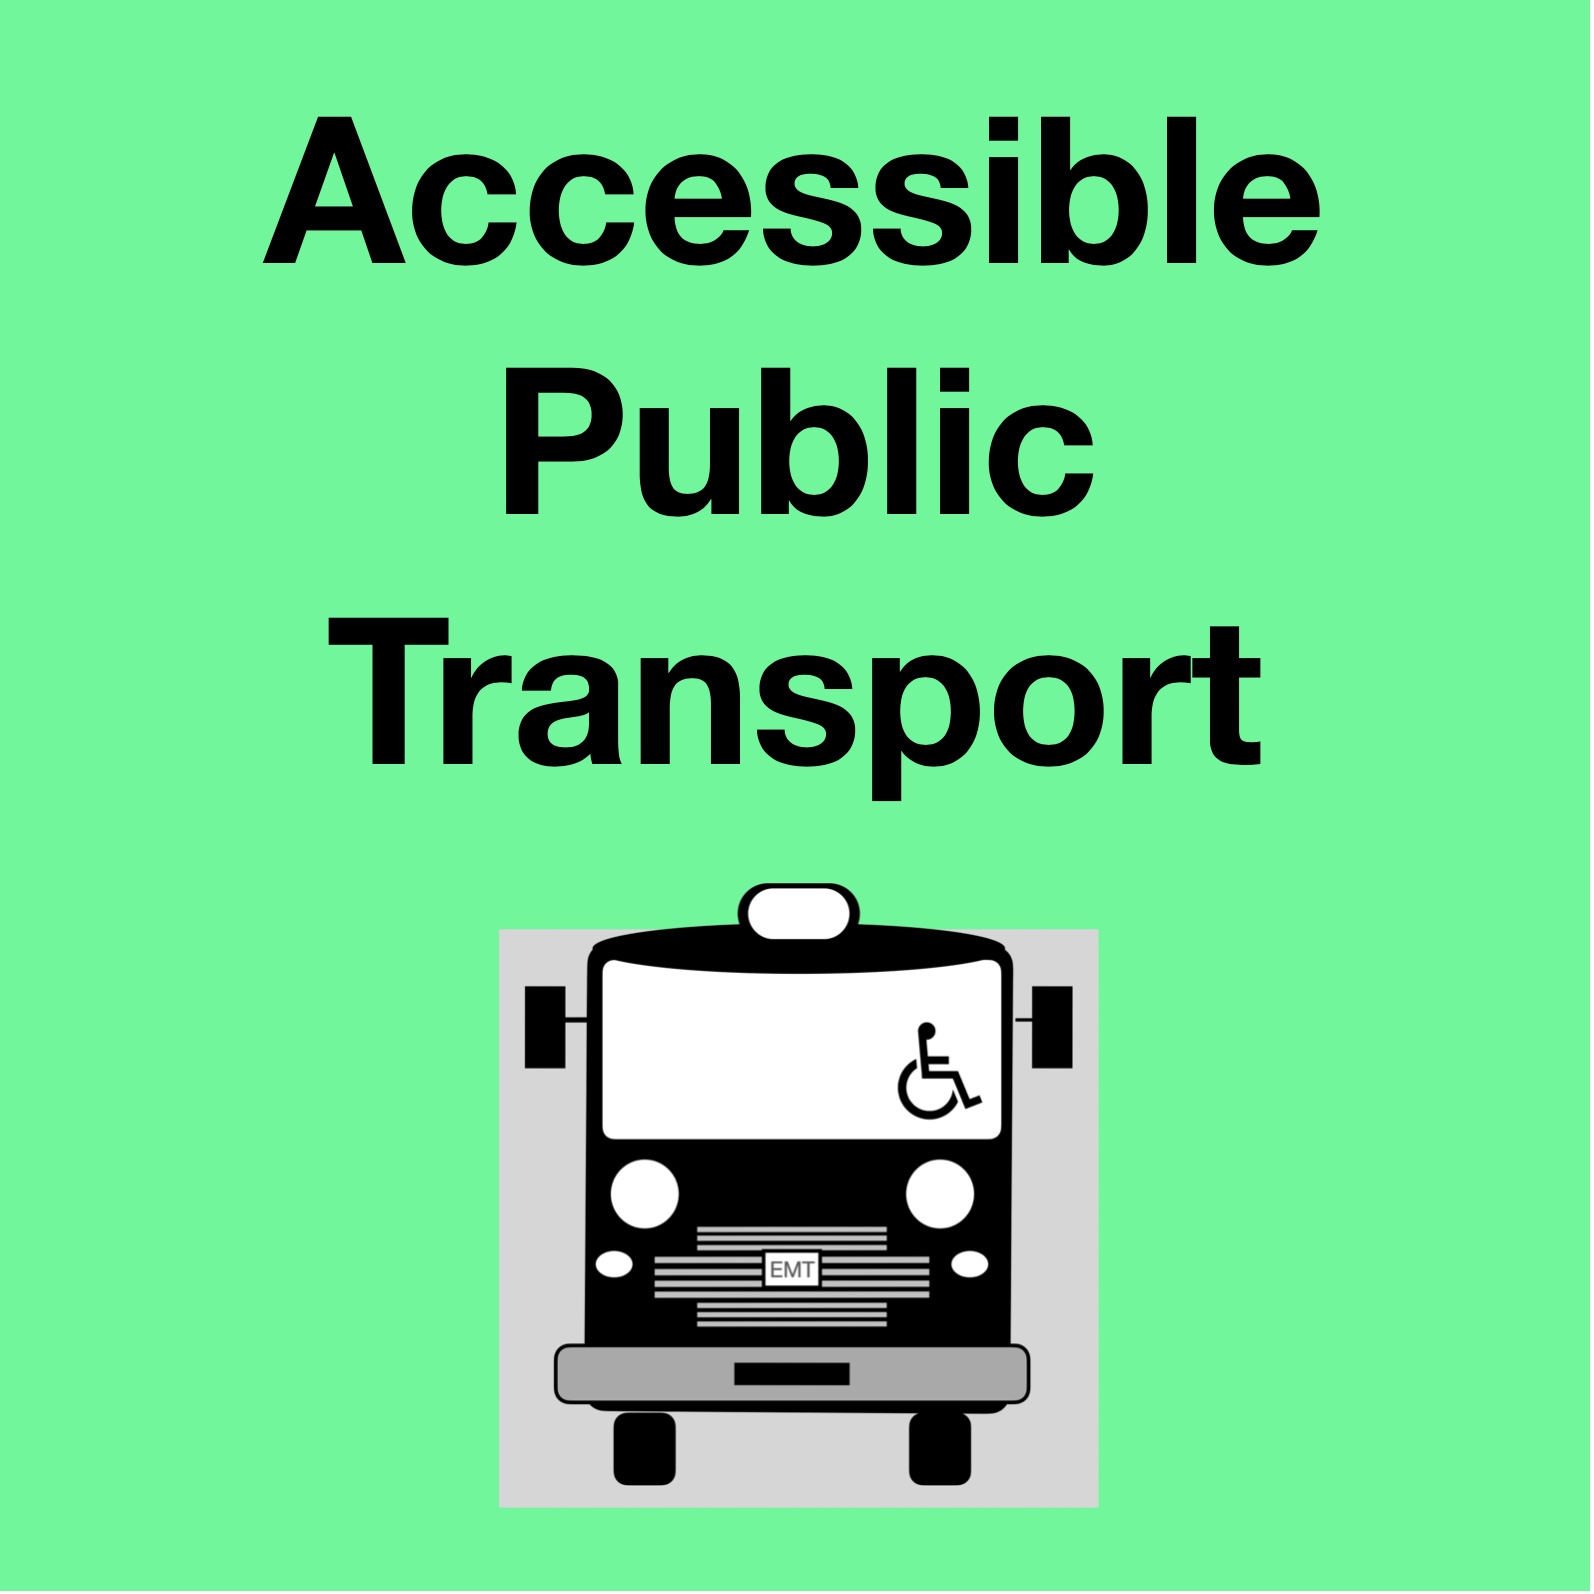 Accessible Public Transport